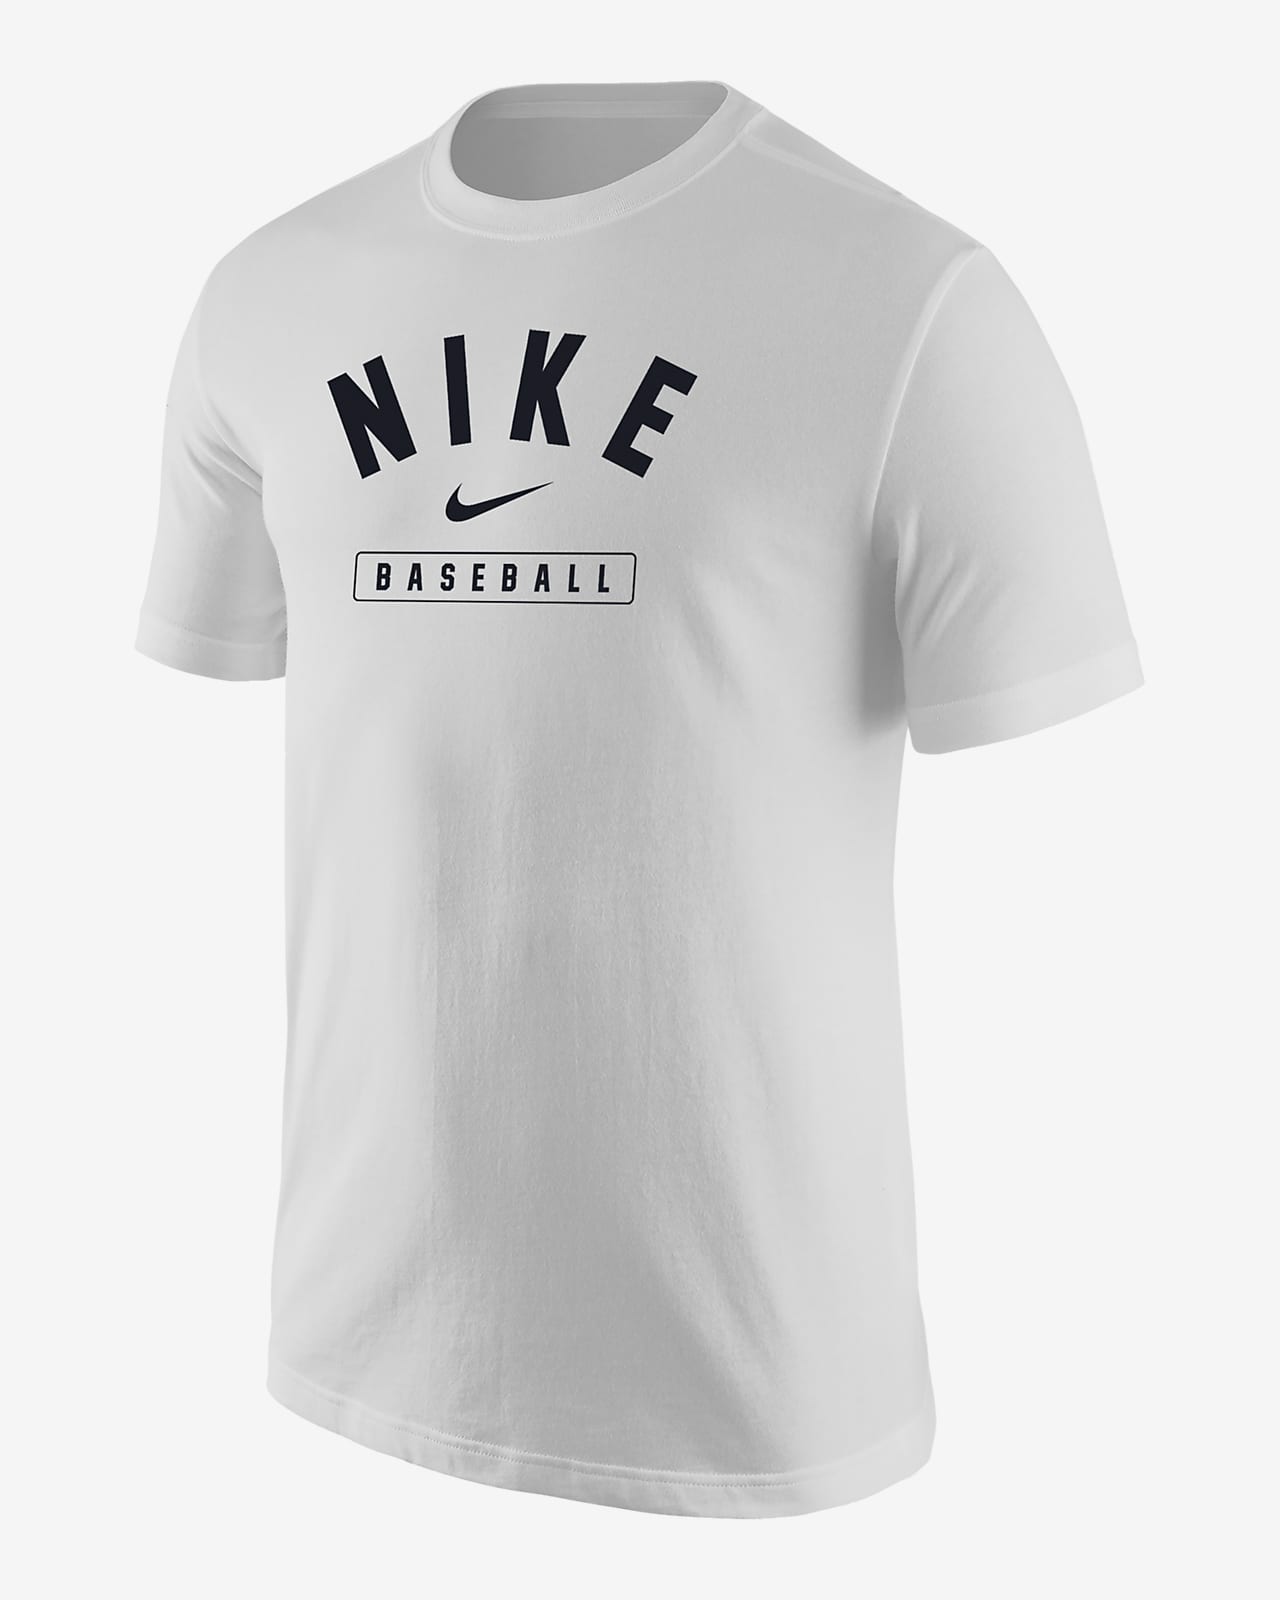 Nike Baseball Men's T-Shirt